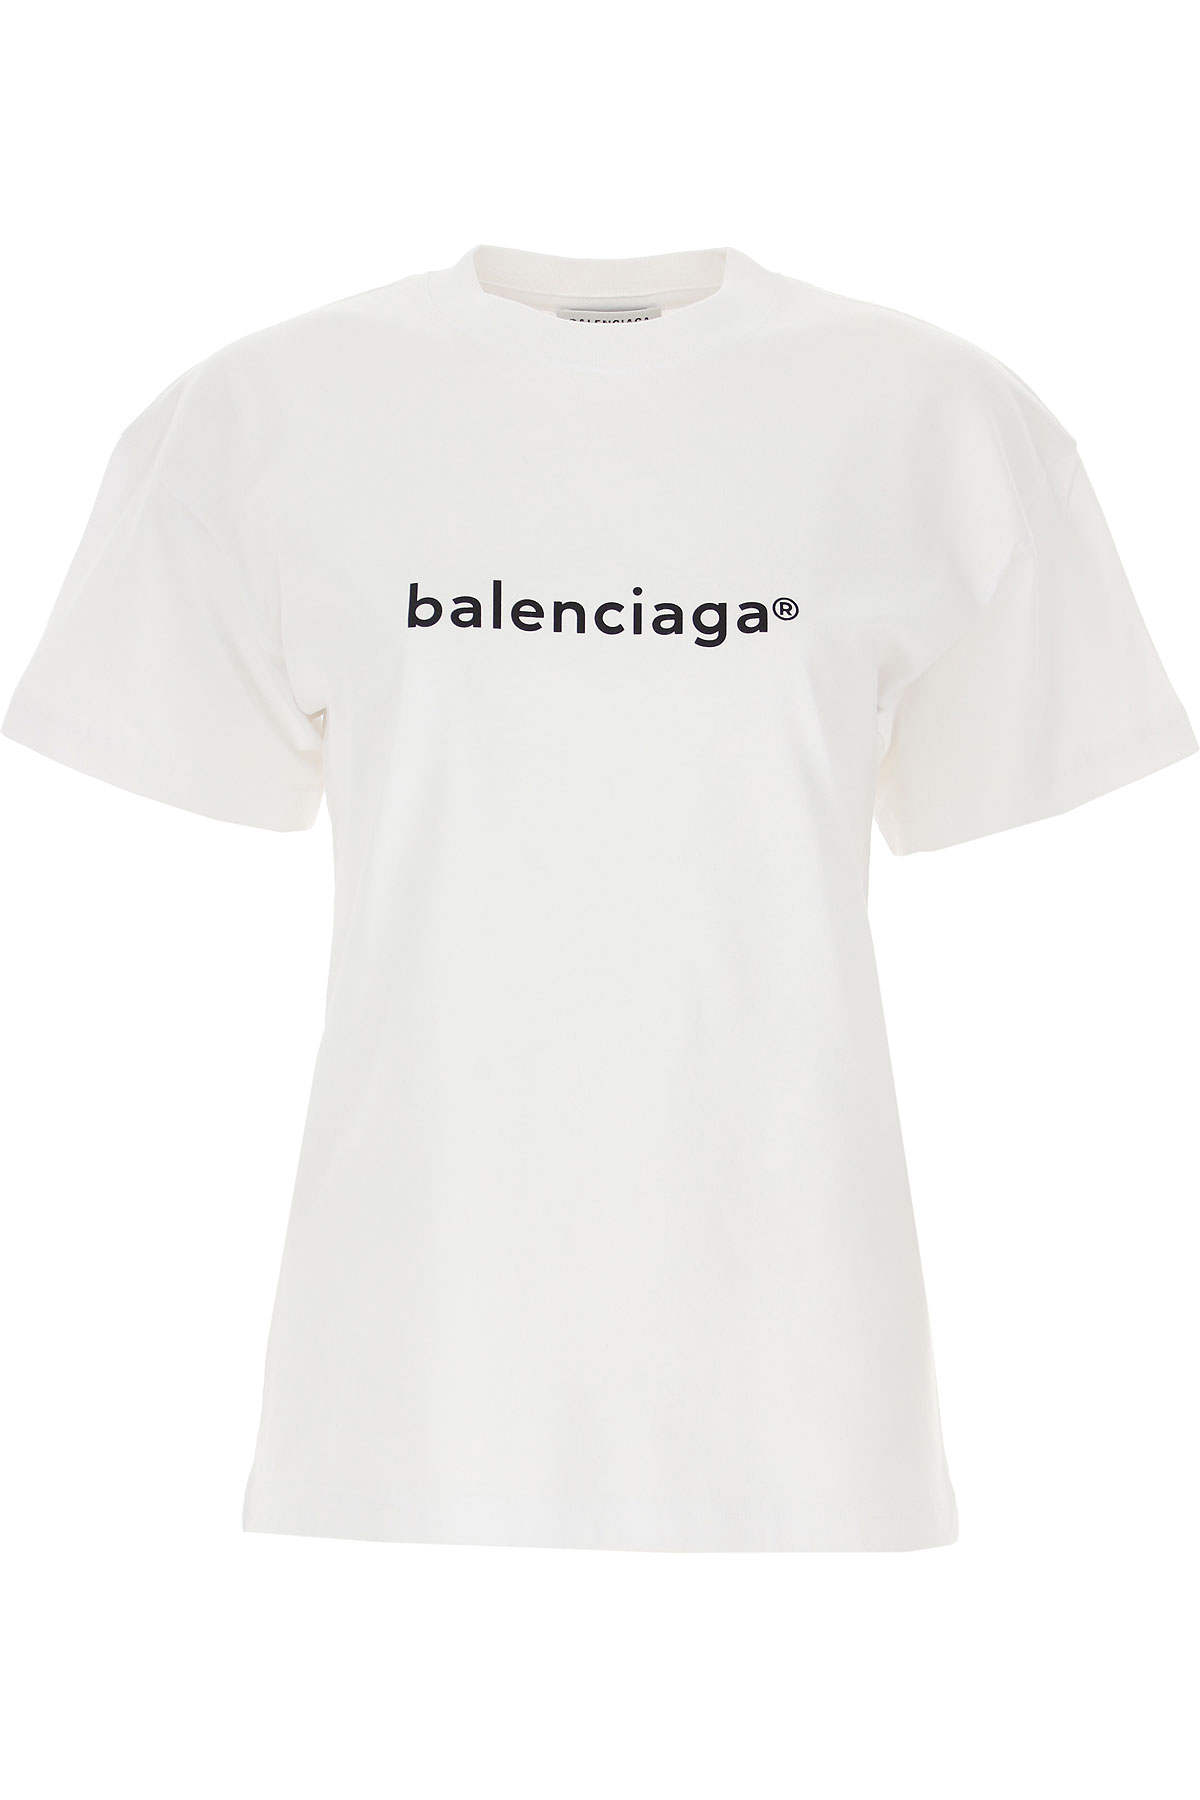 Womens Clothing Balenciaga, Style code: 612965-tiv54-9040